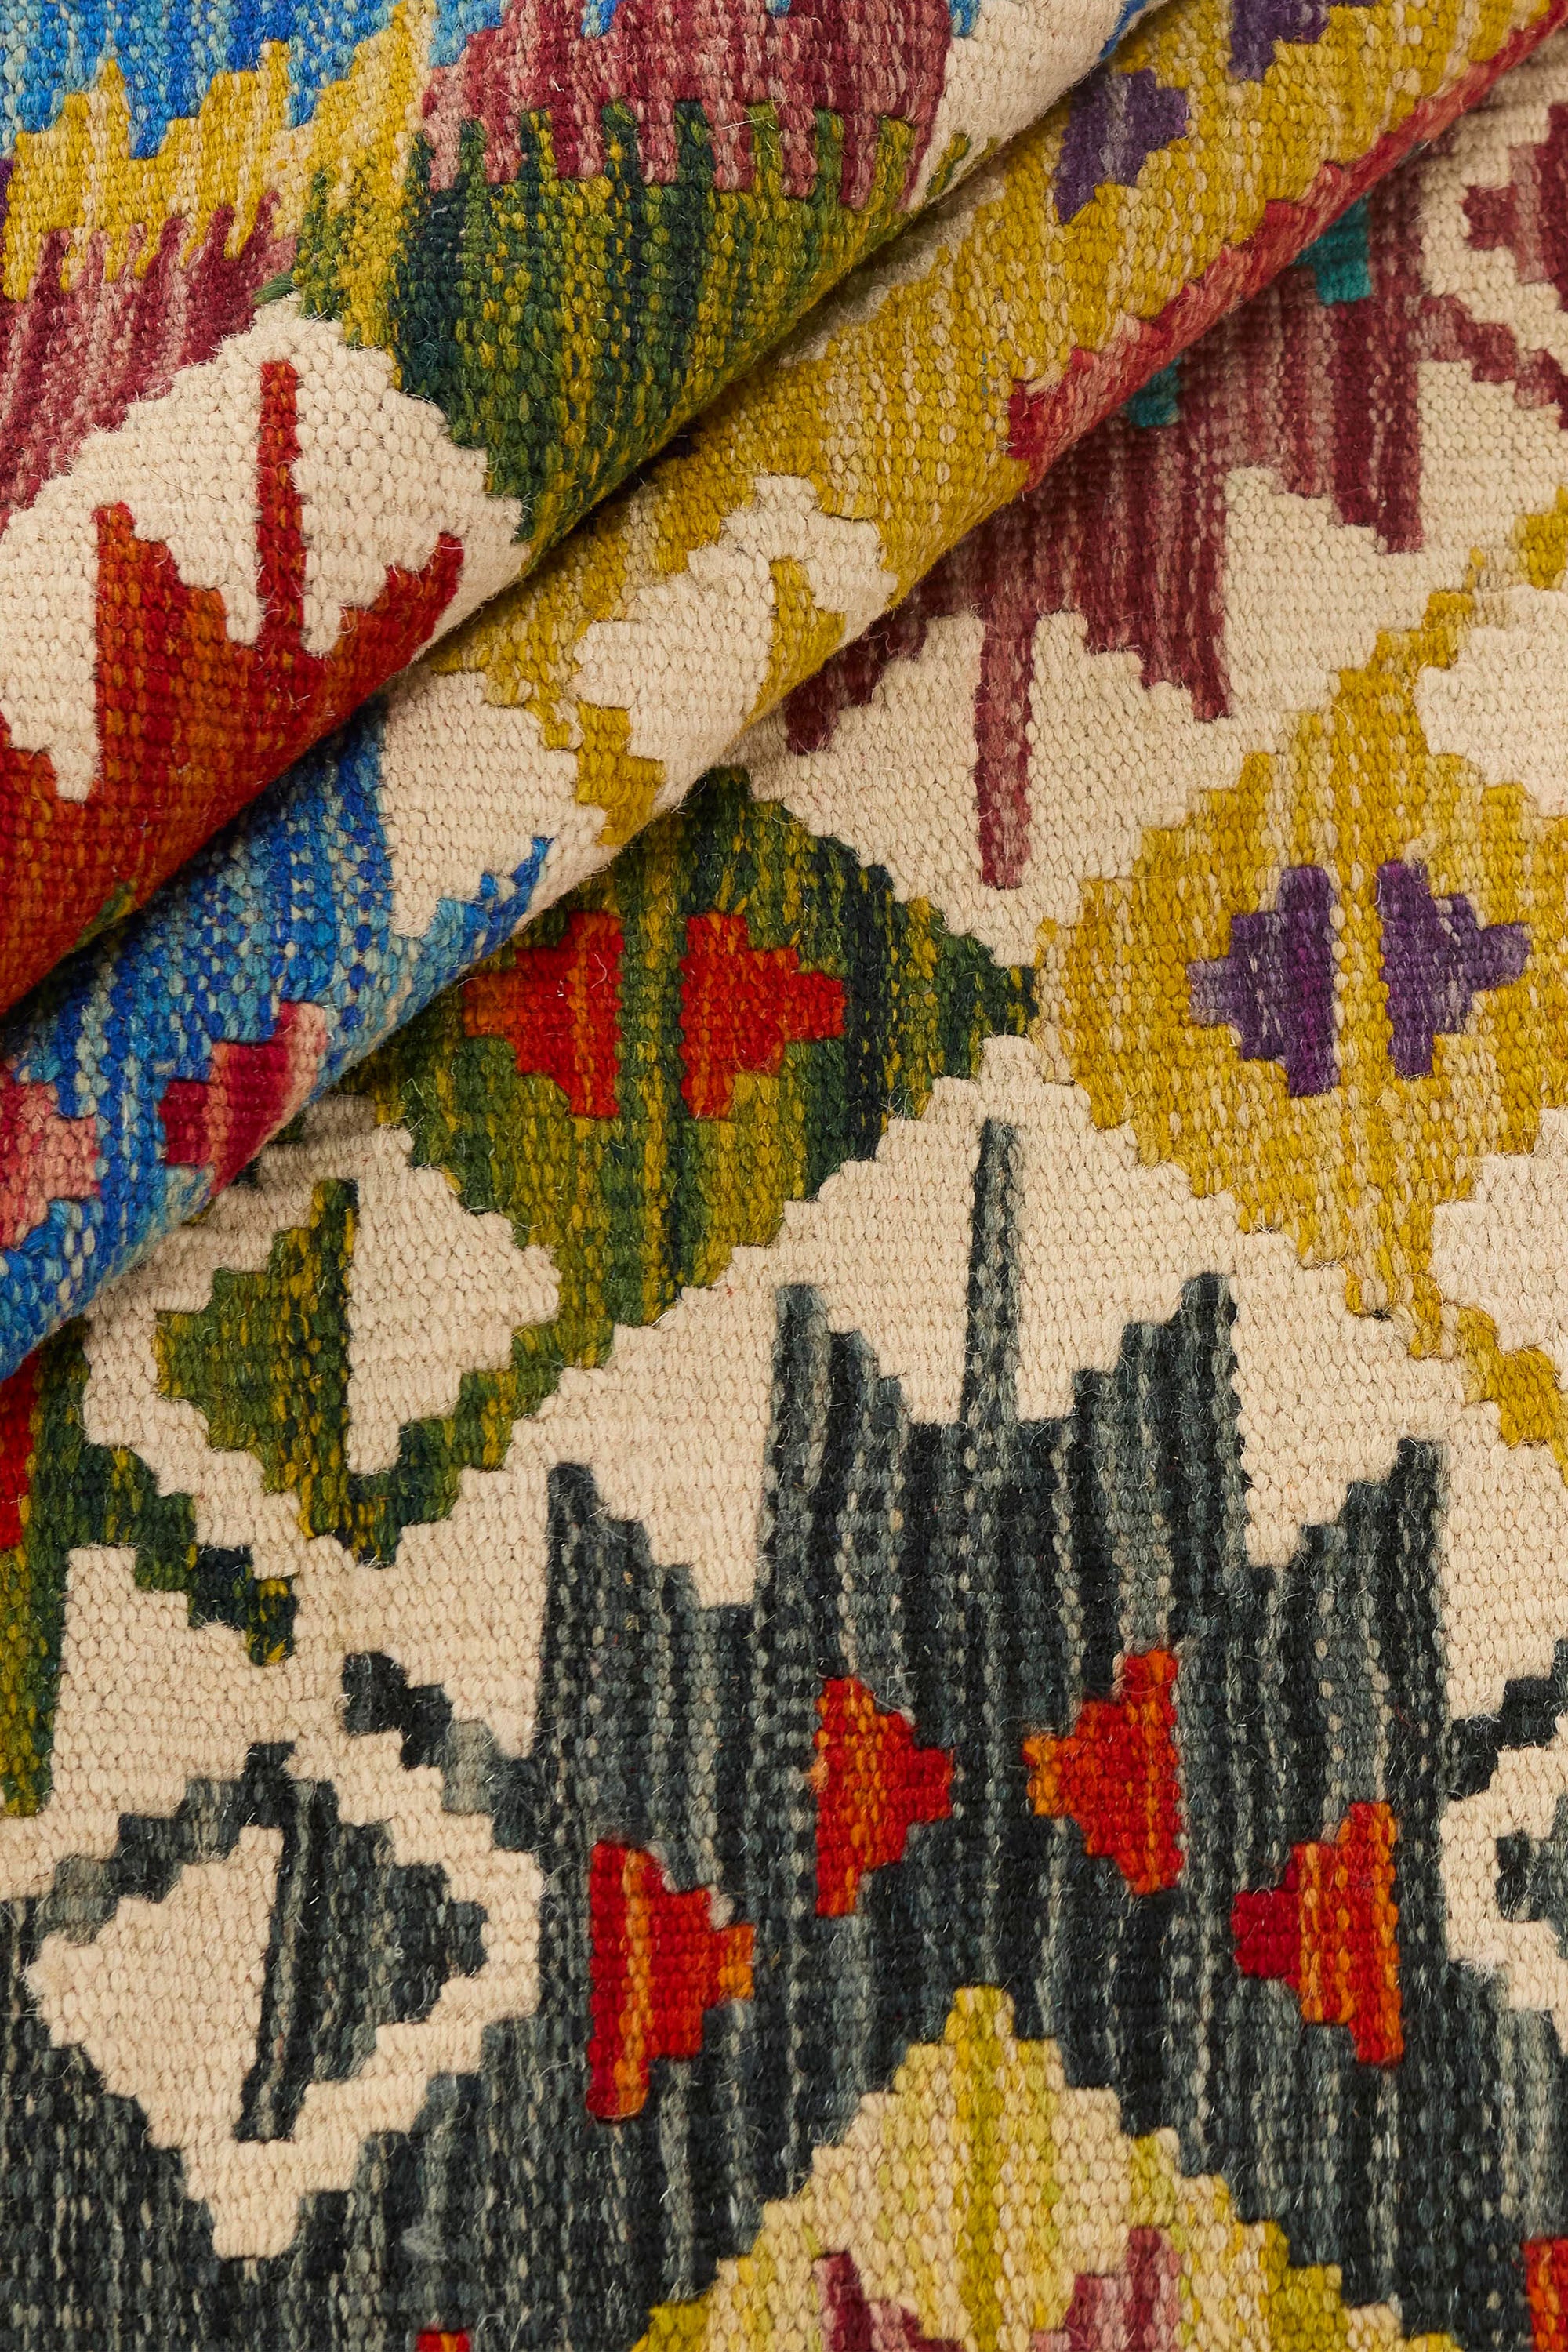 Multicolour traditional Afghan Kilim rug